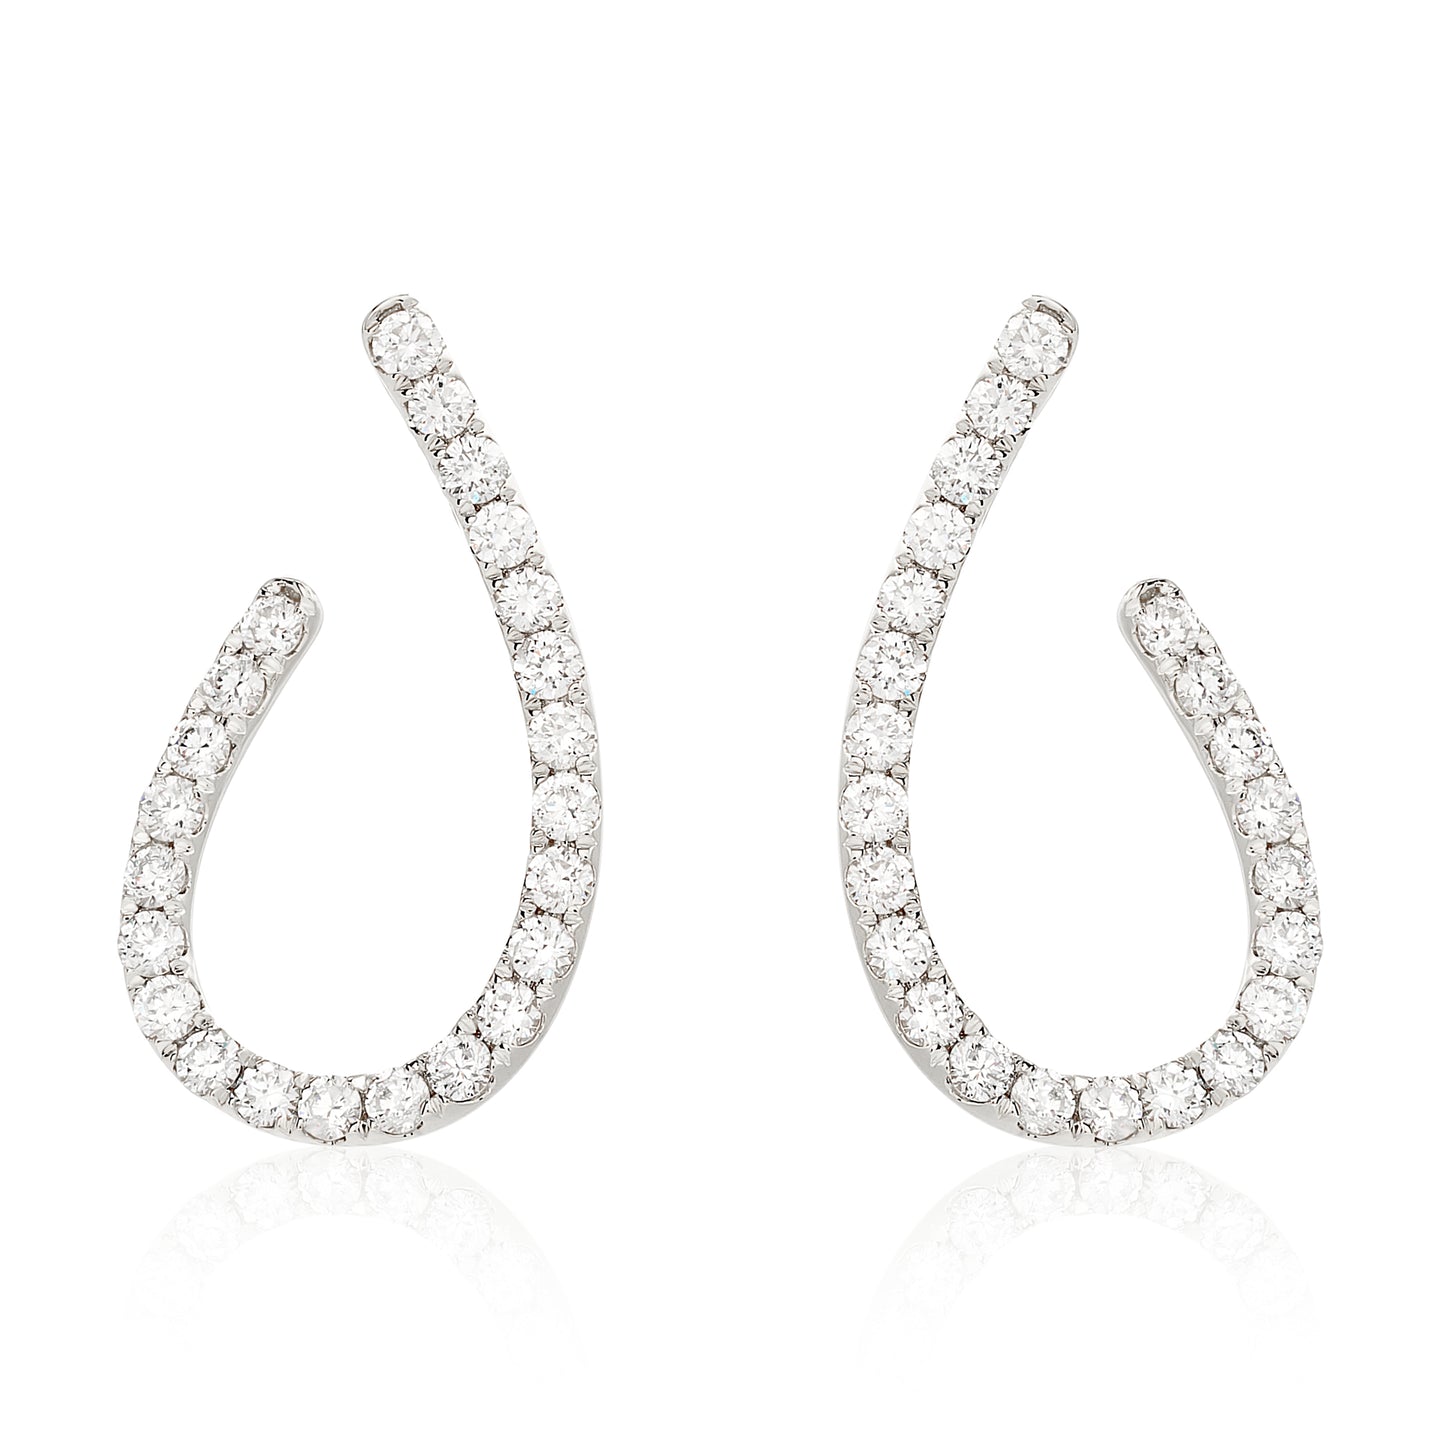 Curved Diamond Earrings